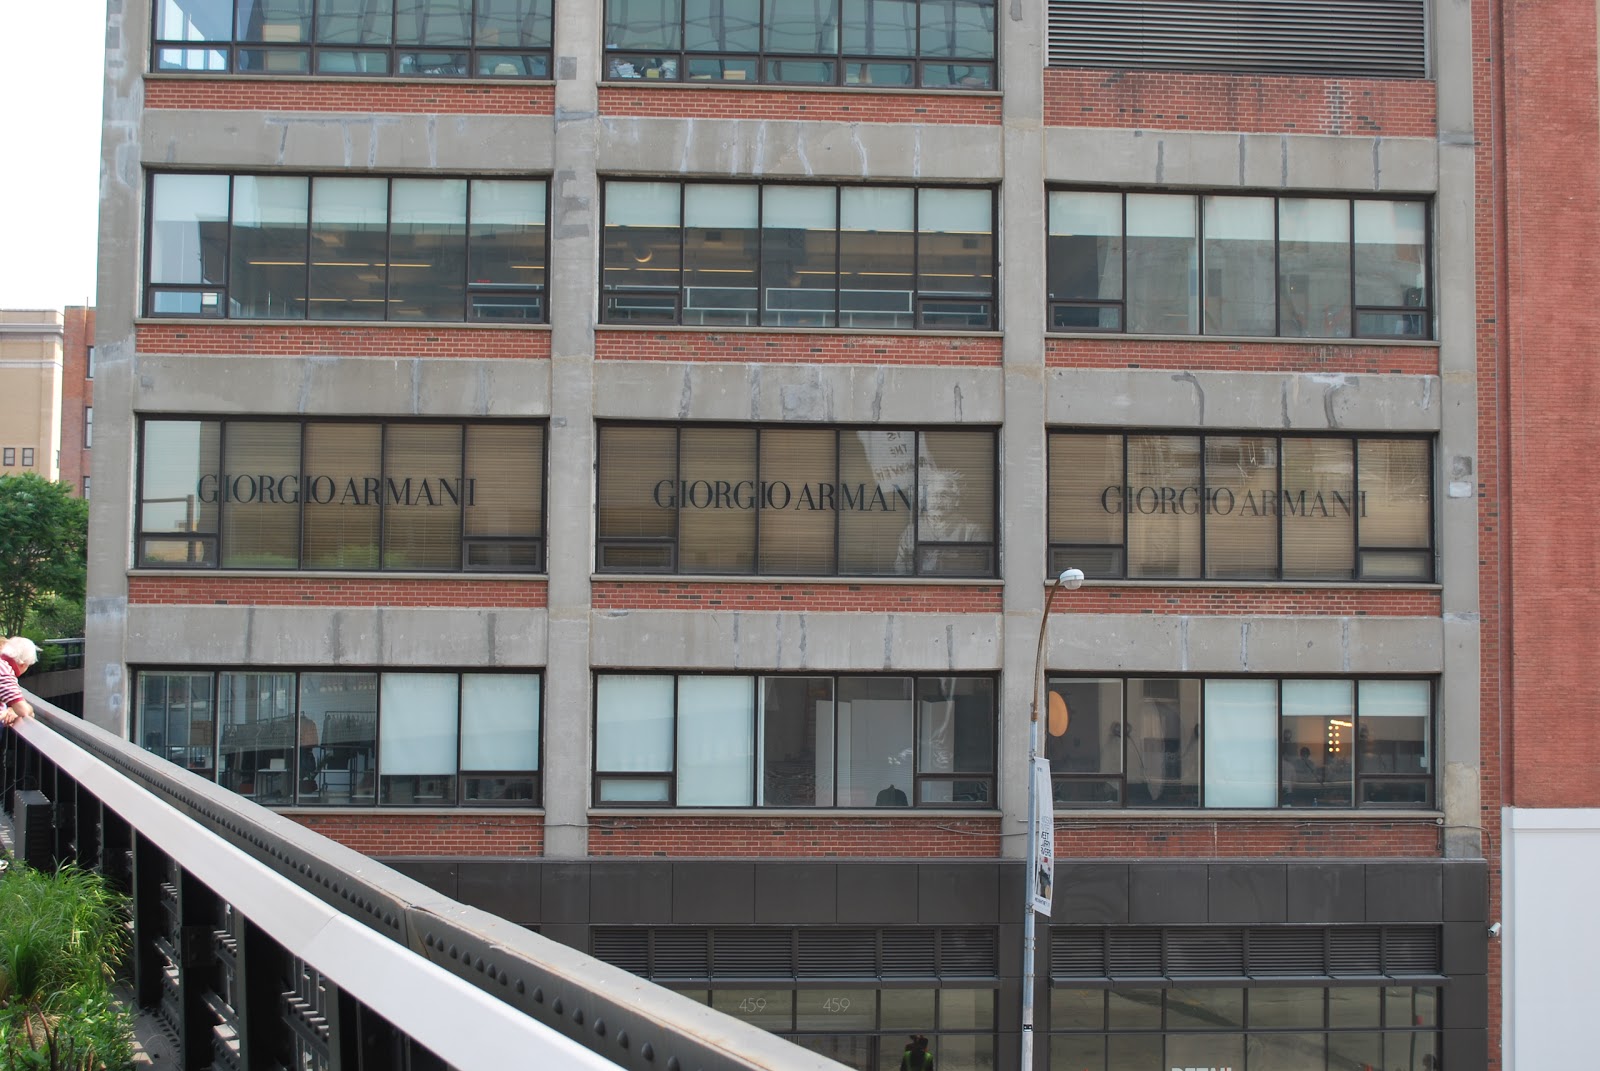 Photo of Giorgio Armani Corporation in New York City, New York, United States - 1 Picture of Point of interest, Establishment